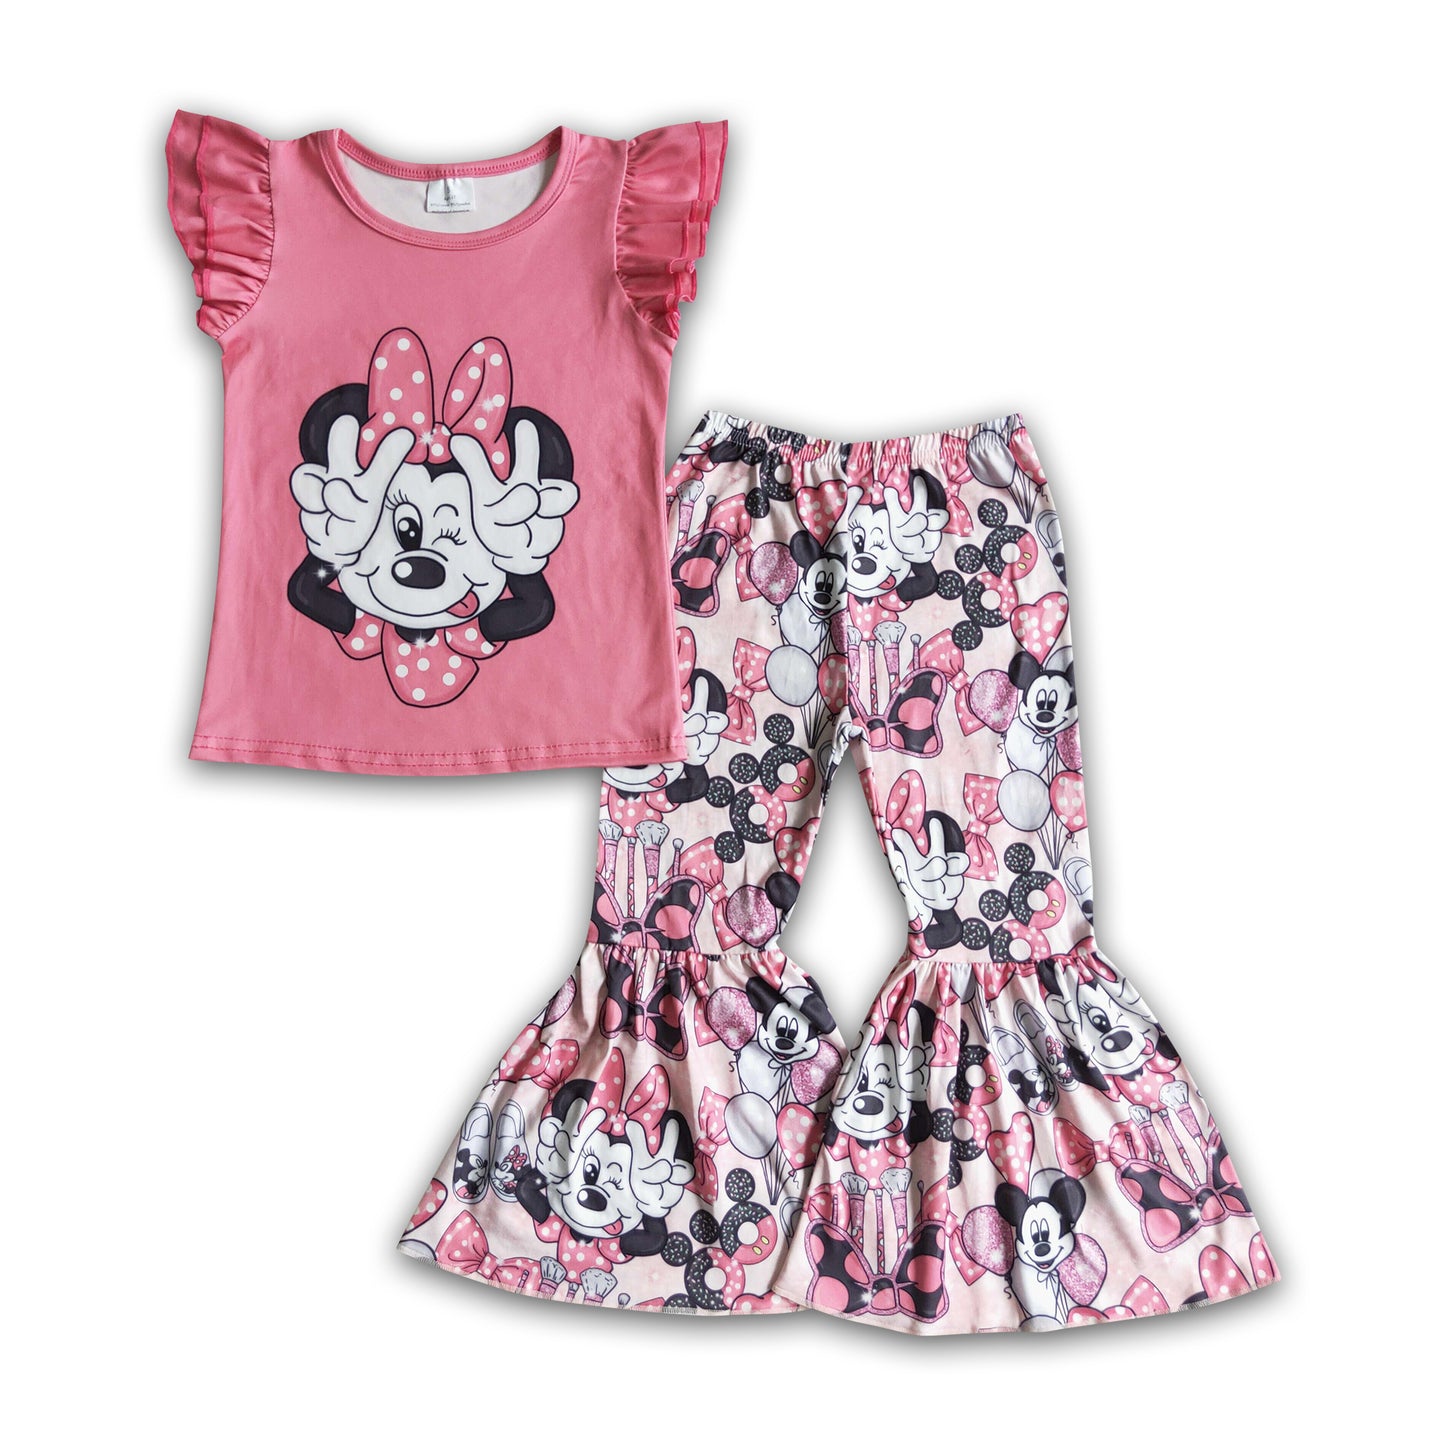 Pink cute shirt mouse bell bottom pants set girls boutique clothes